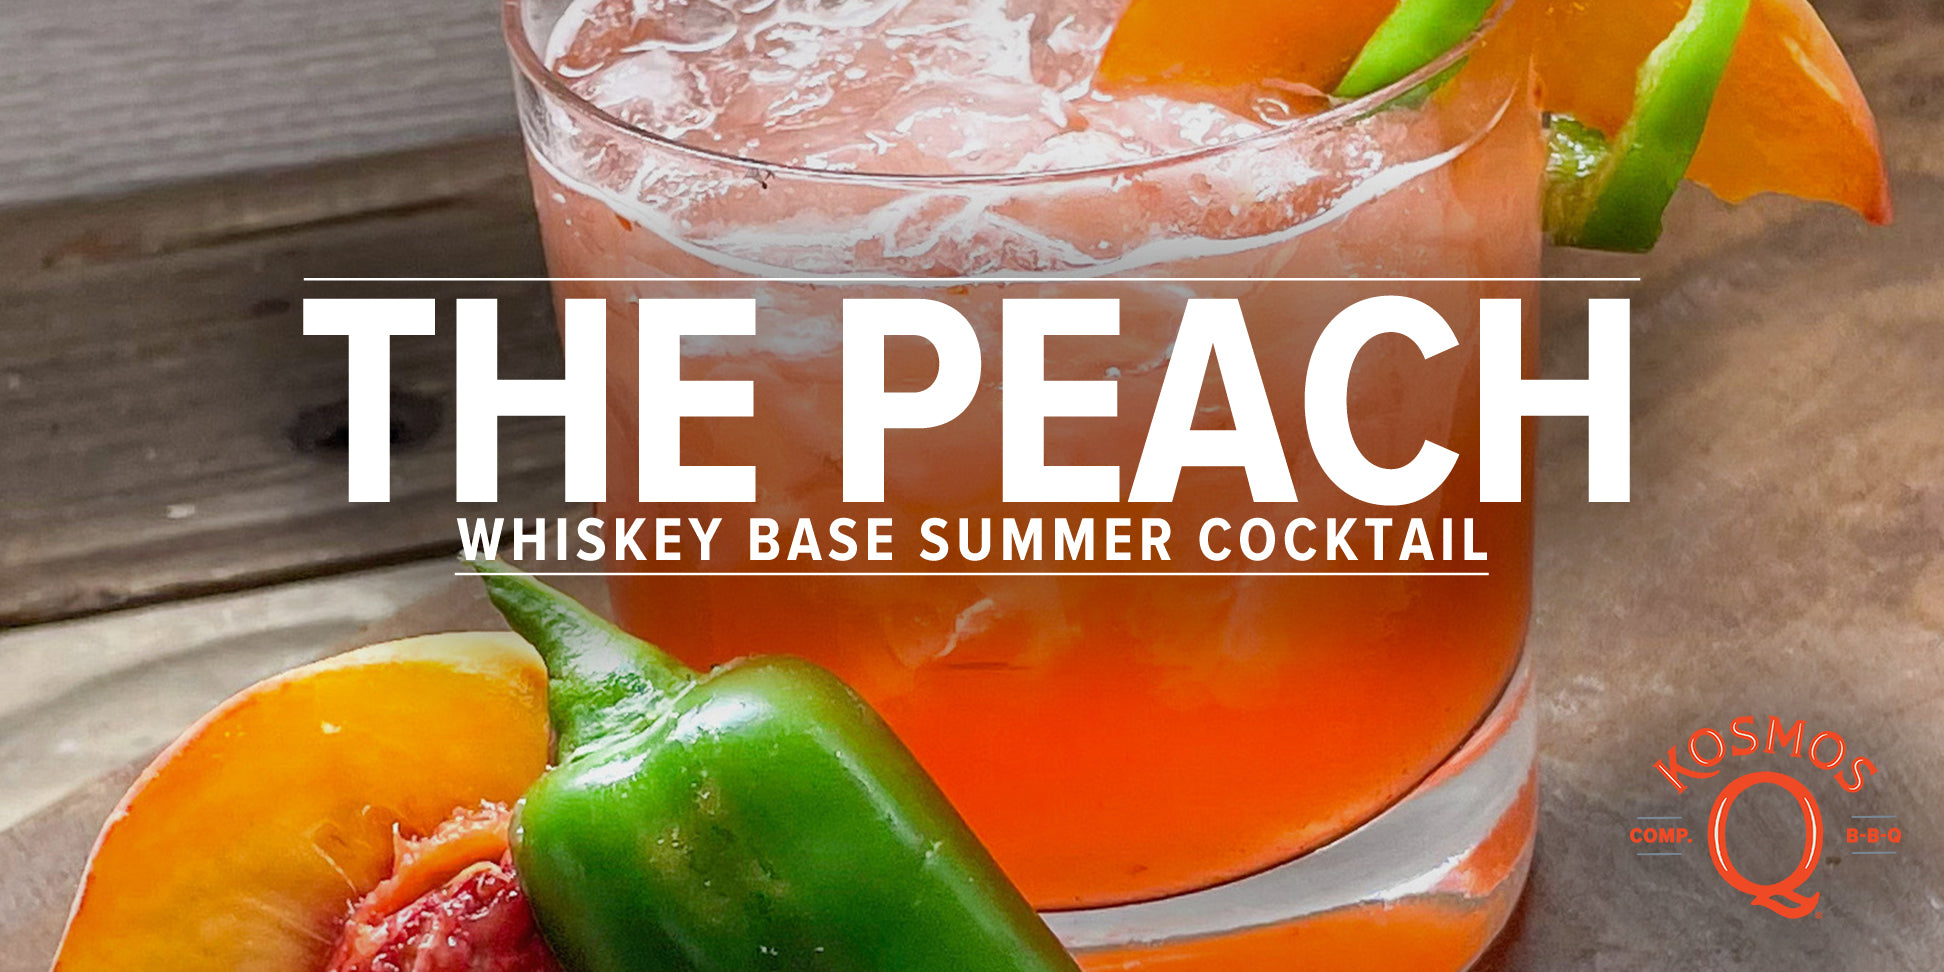 "The Peach" Summer Cocktail Recipe